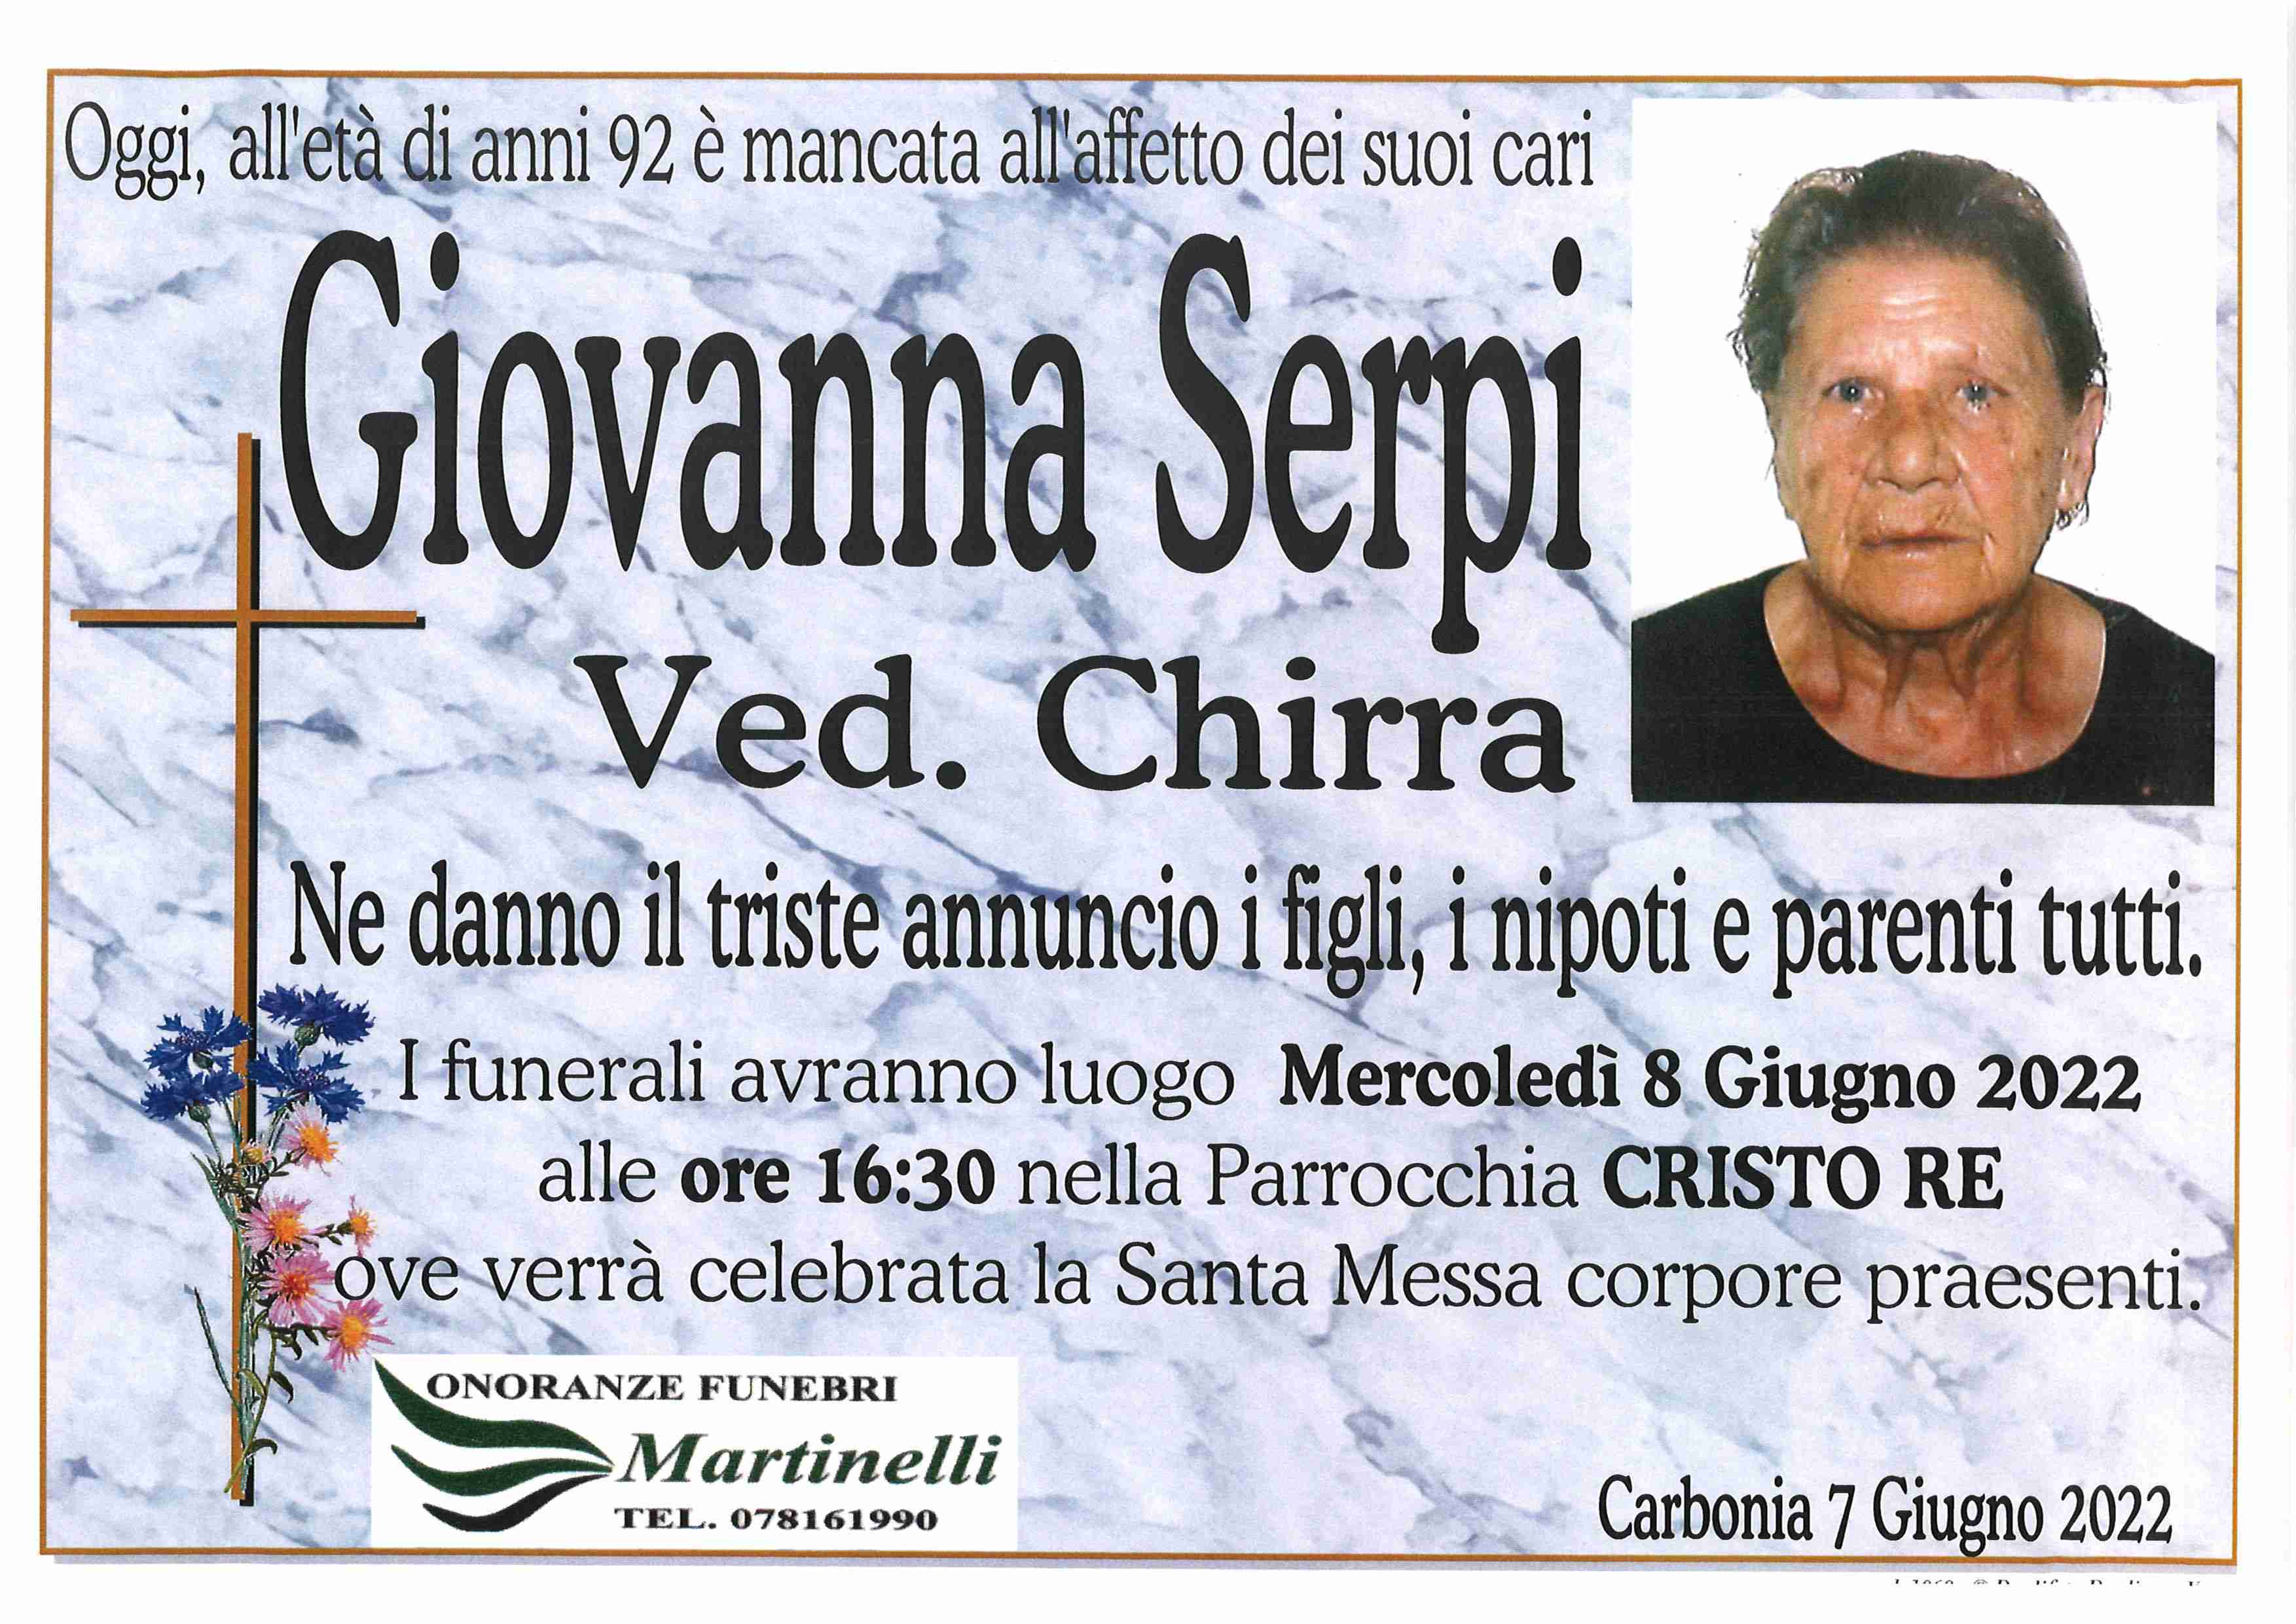 Giovanna Serpi